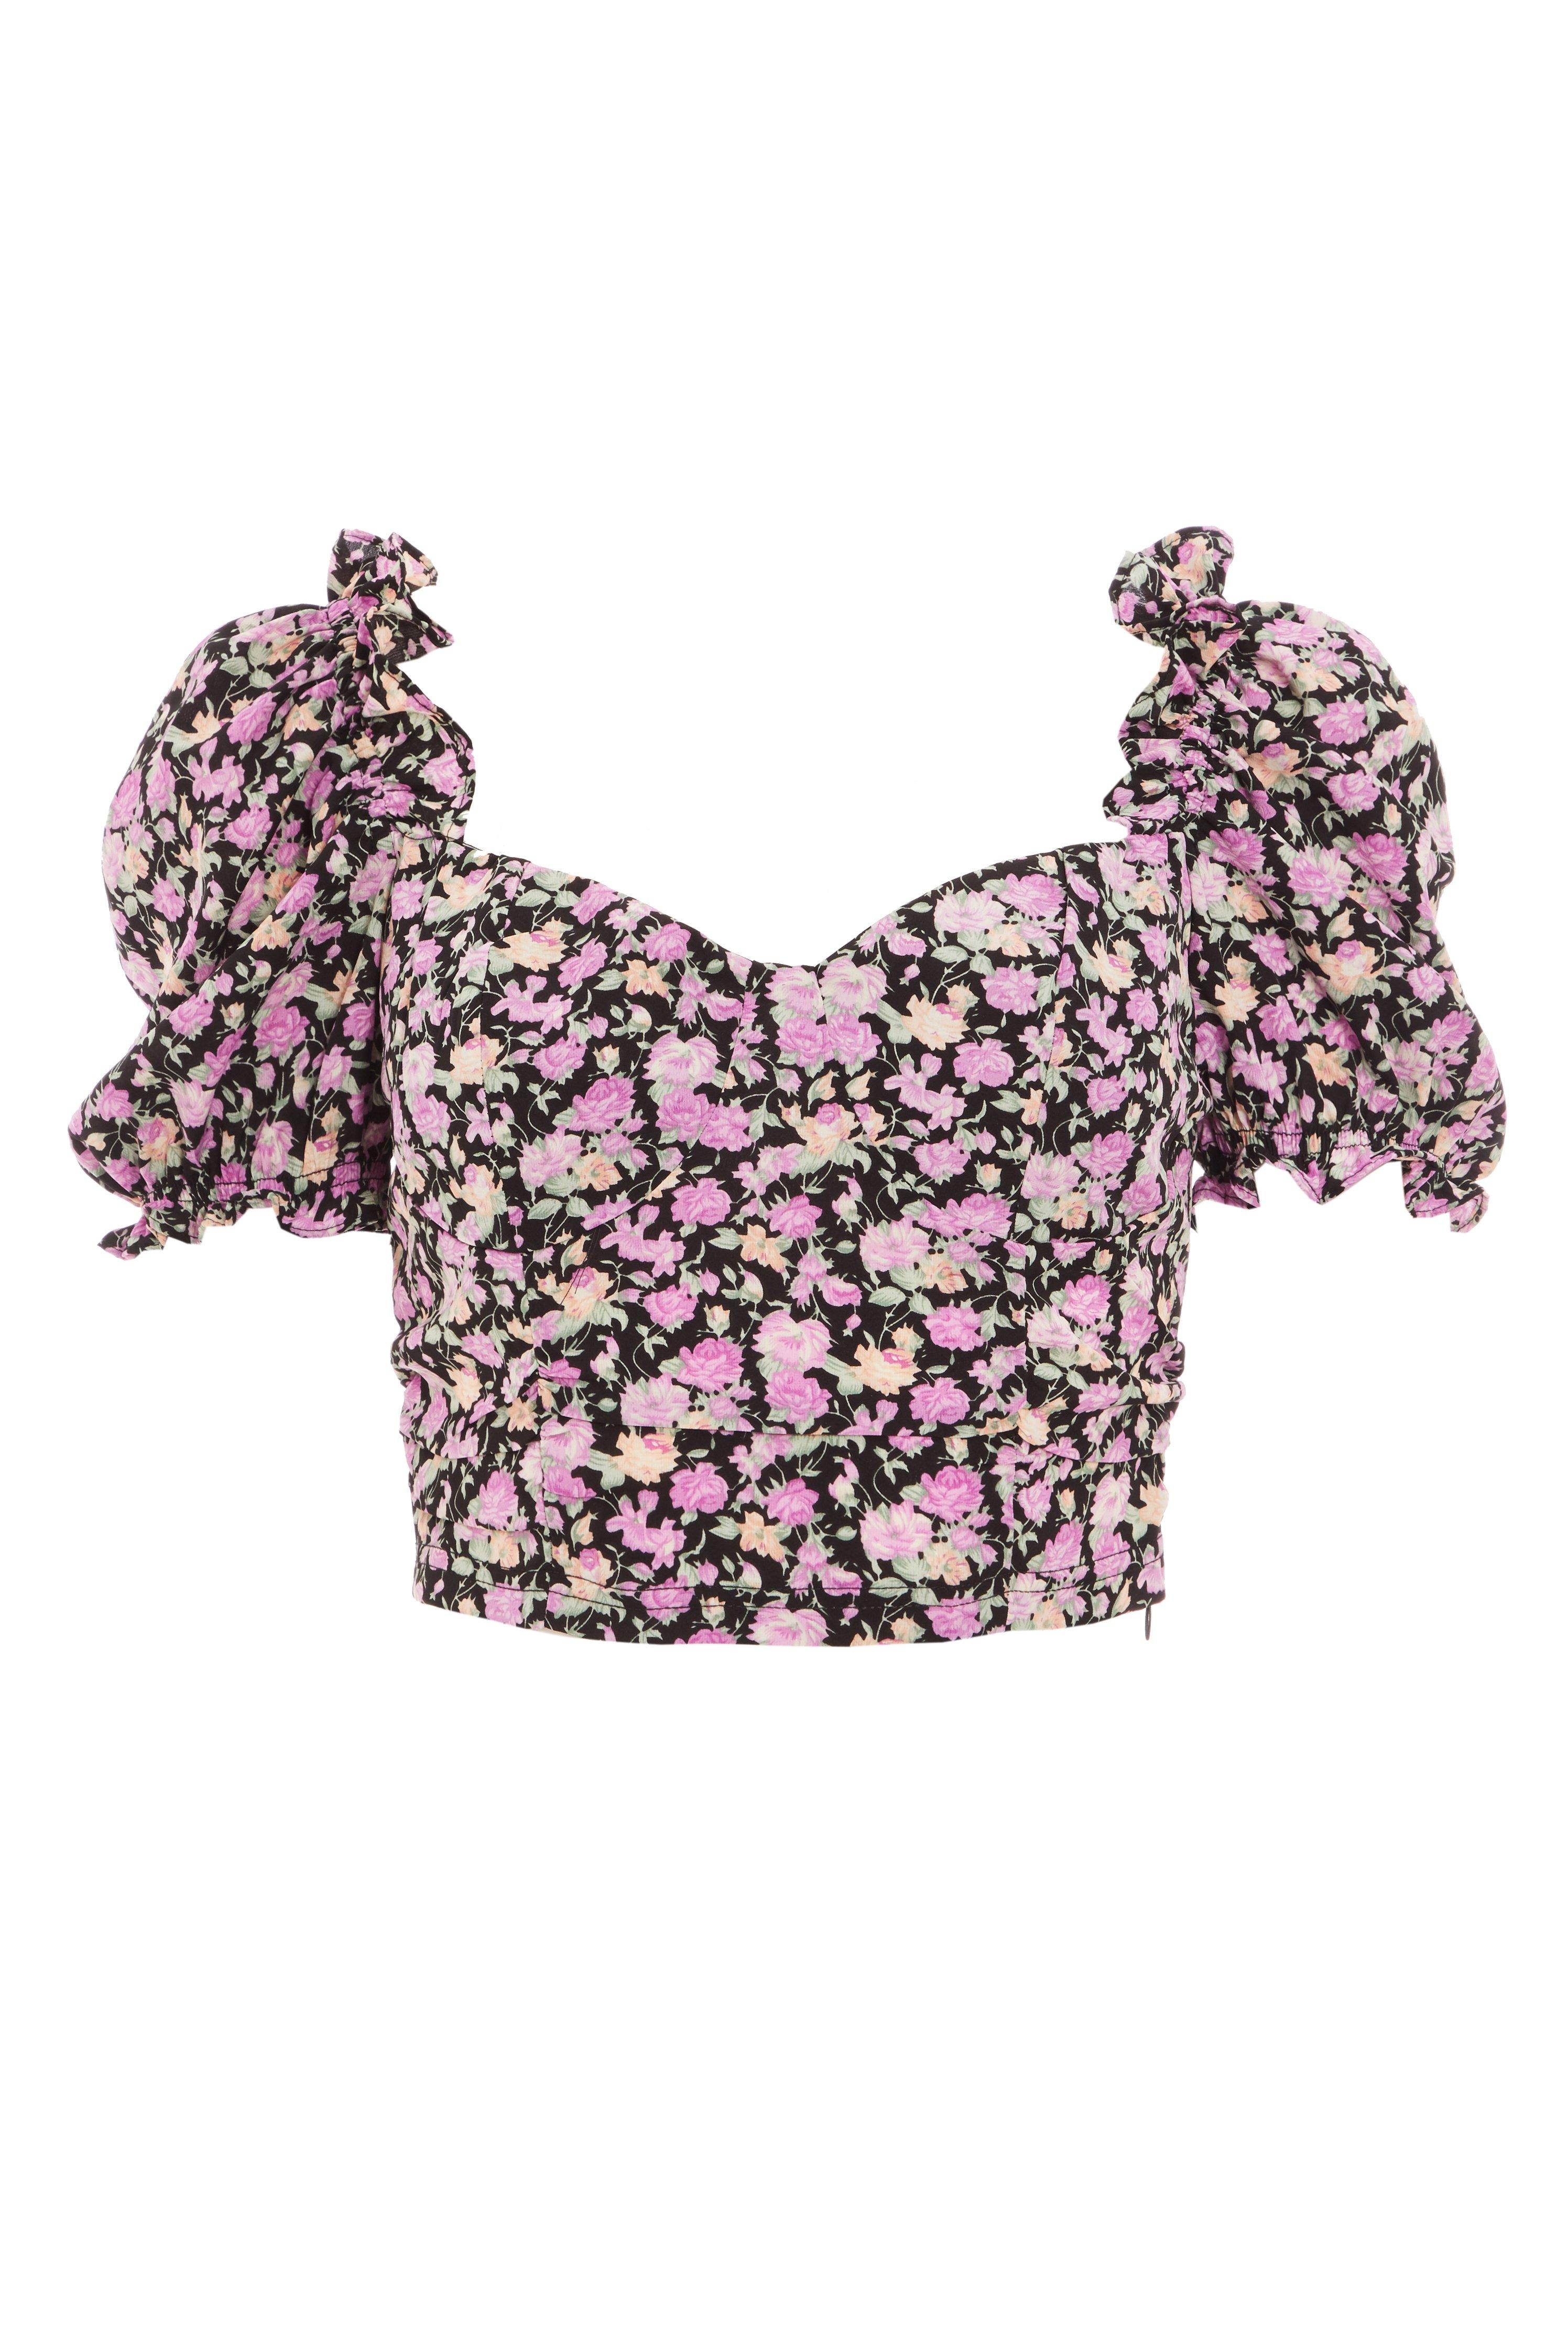 Black & Pink Floral Crop Top - Quiz Clothing